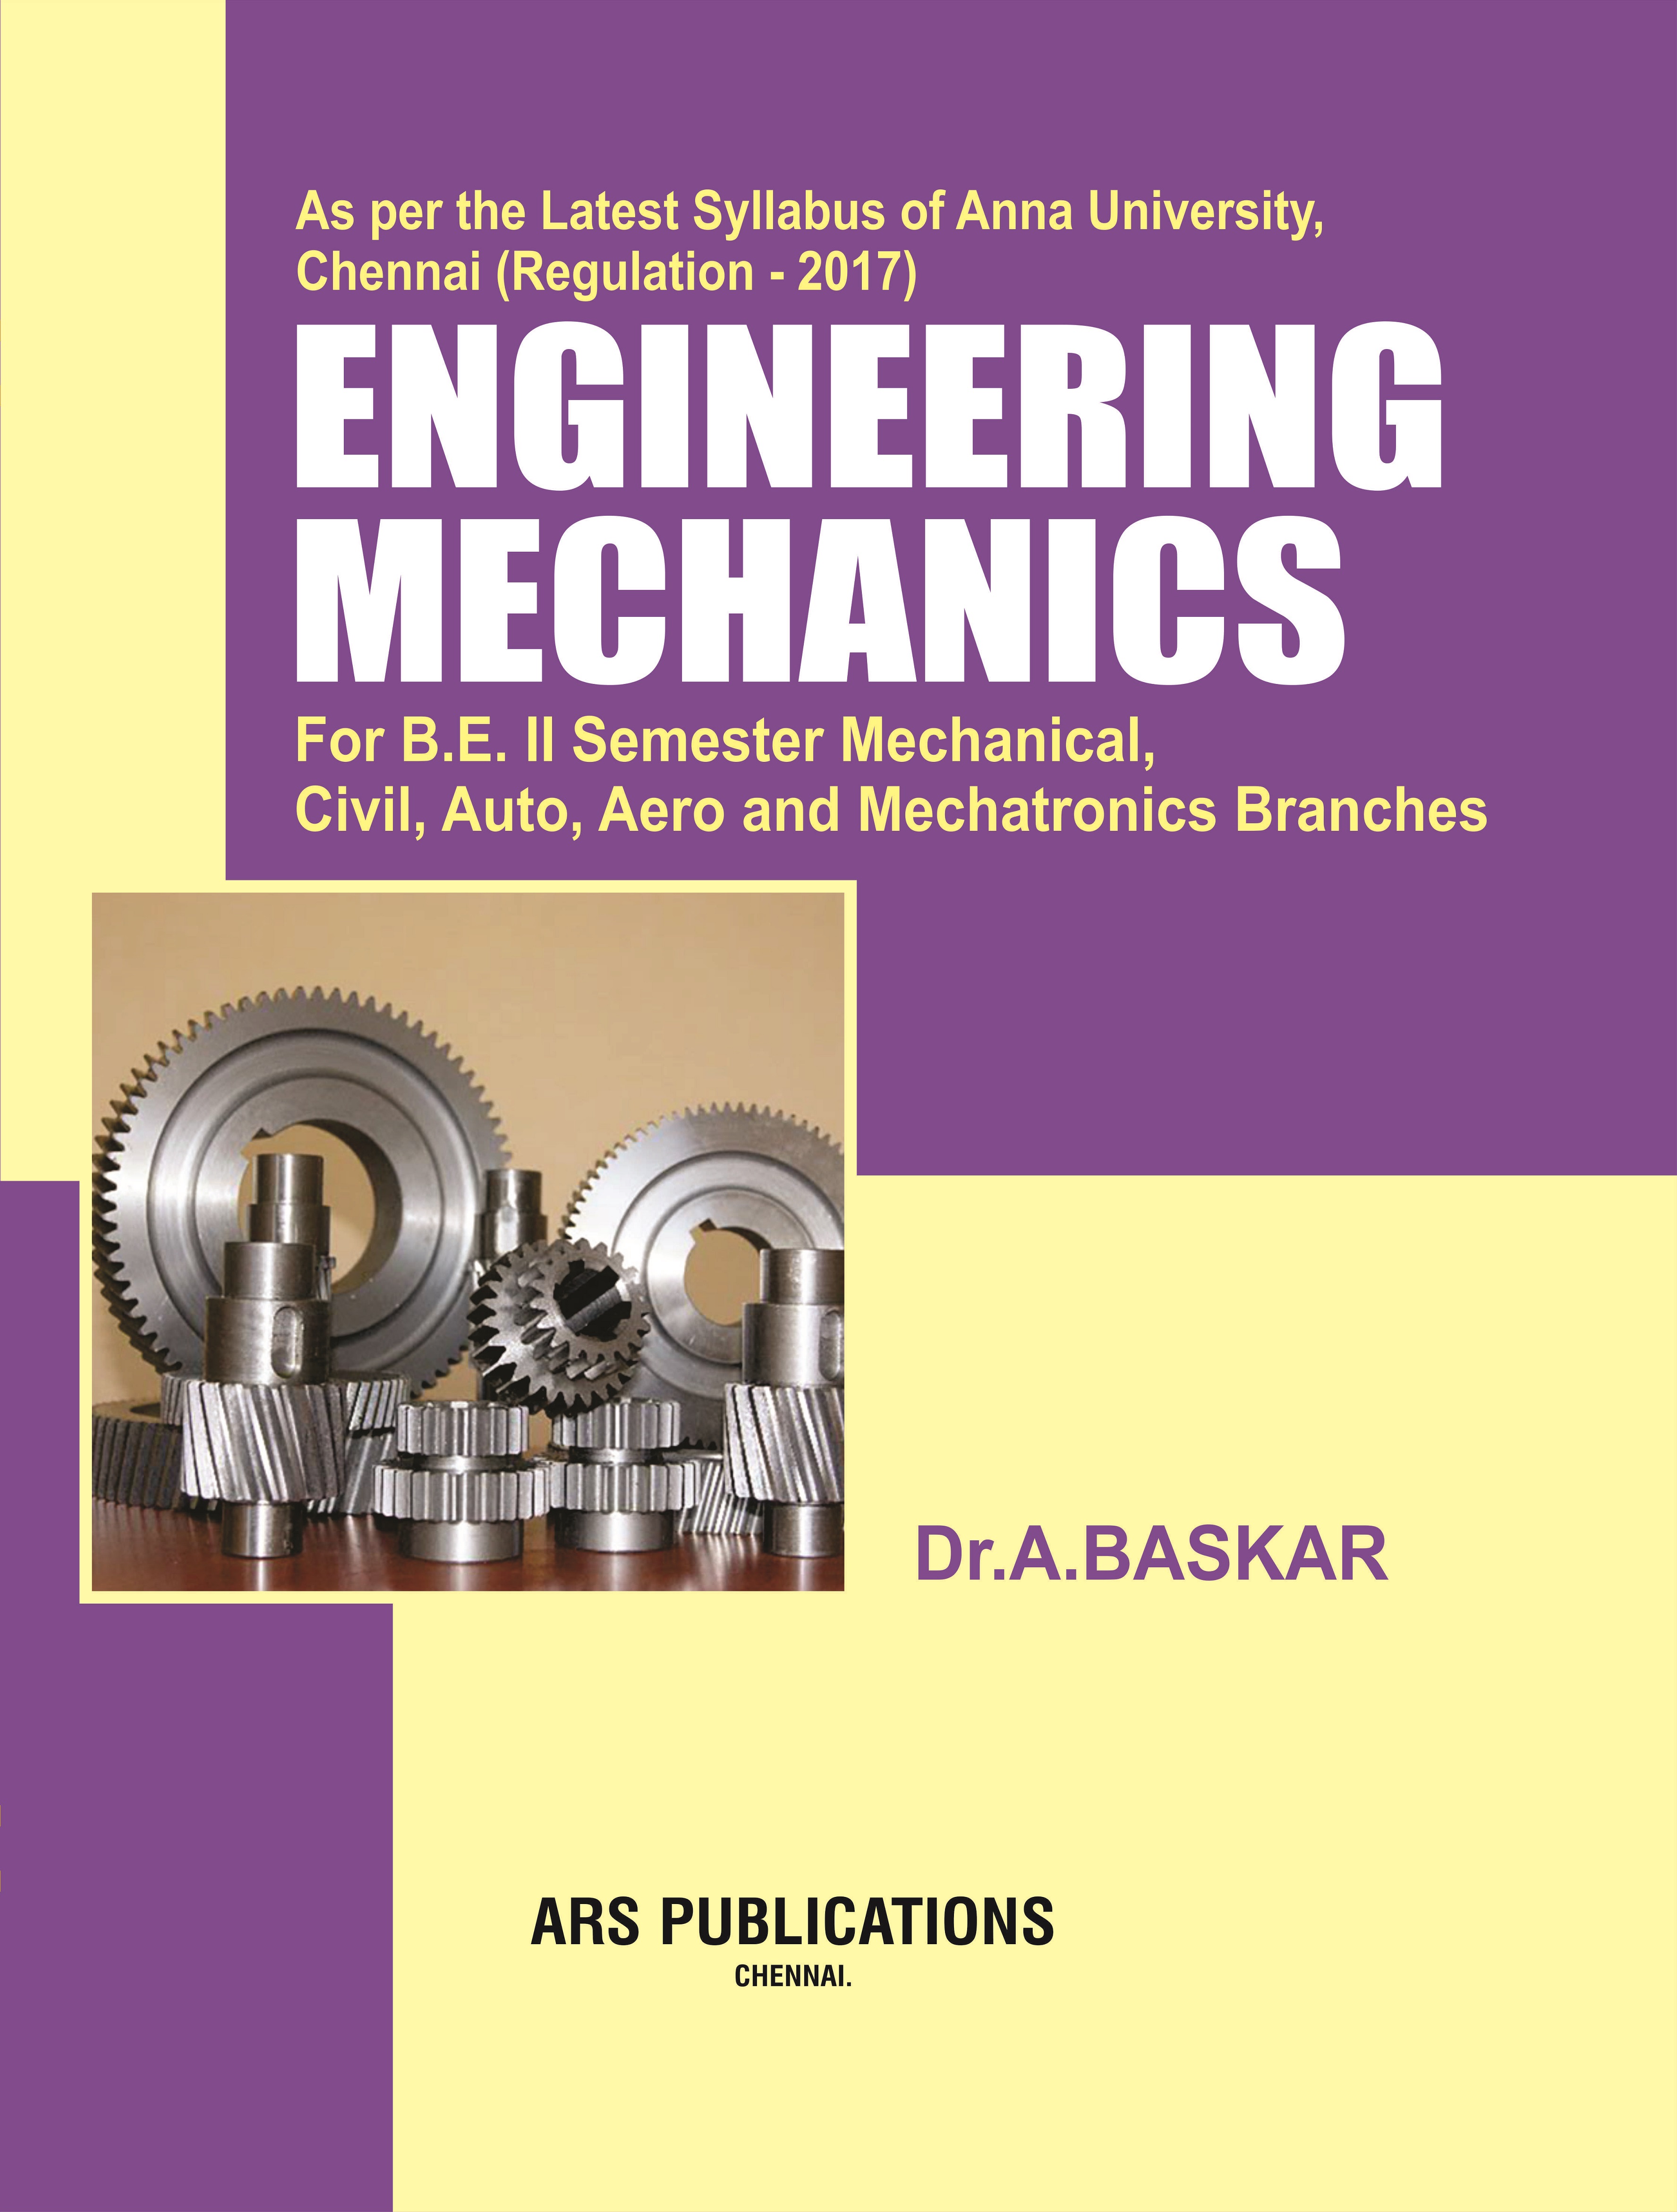 Journal of Mechanical Engineering 2015 2 by Darko Svetak - Issuu